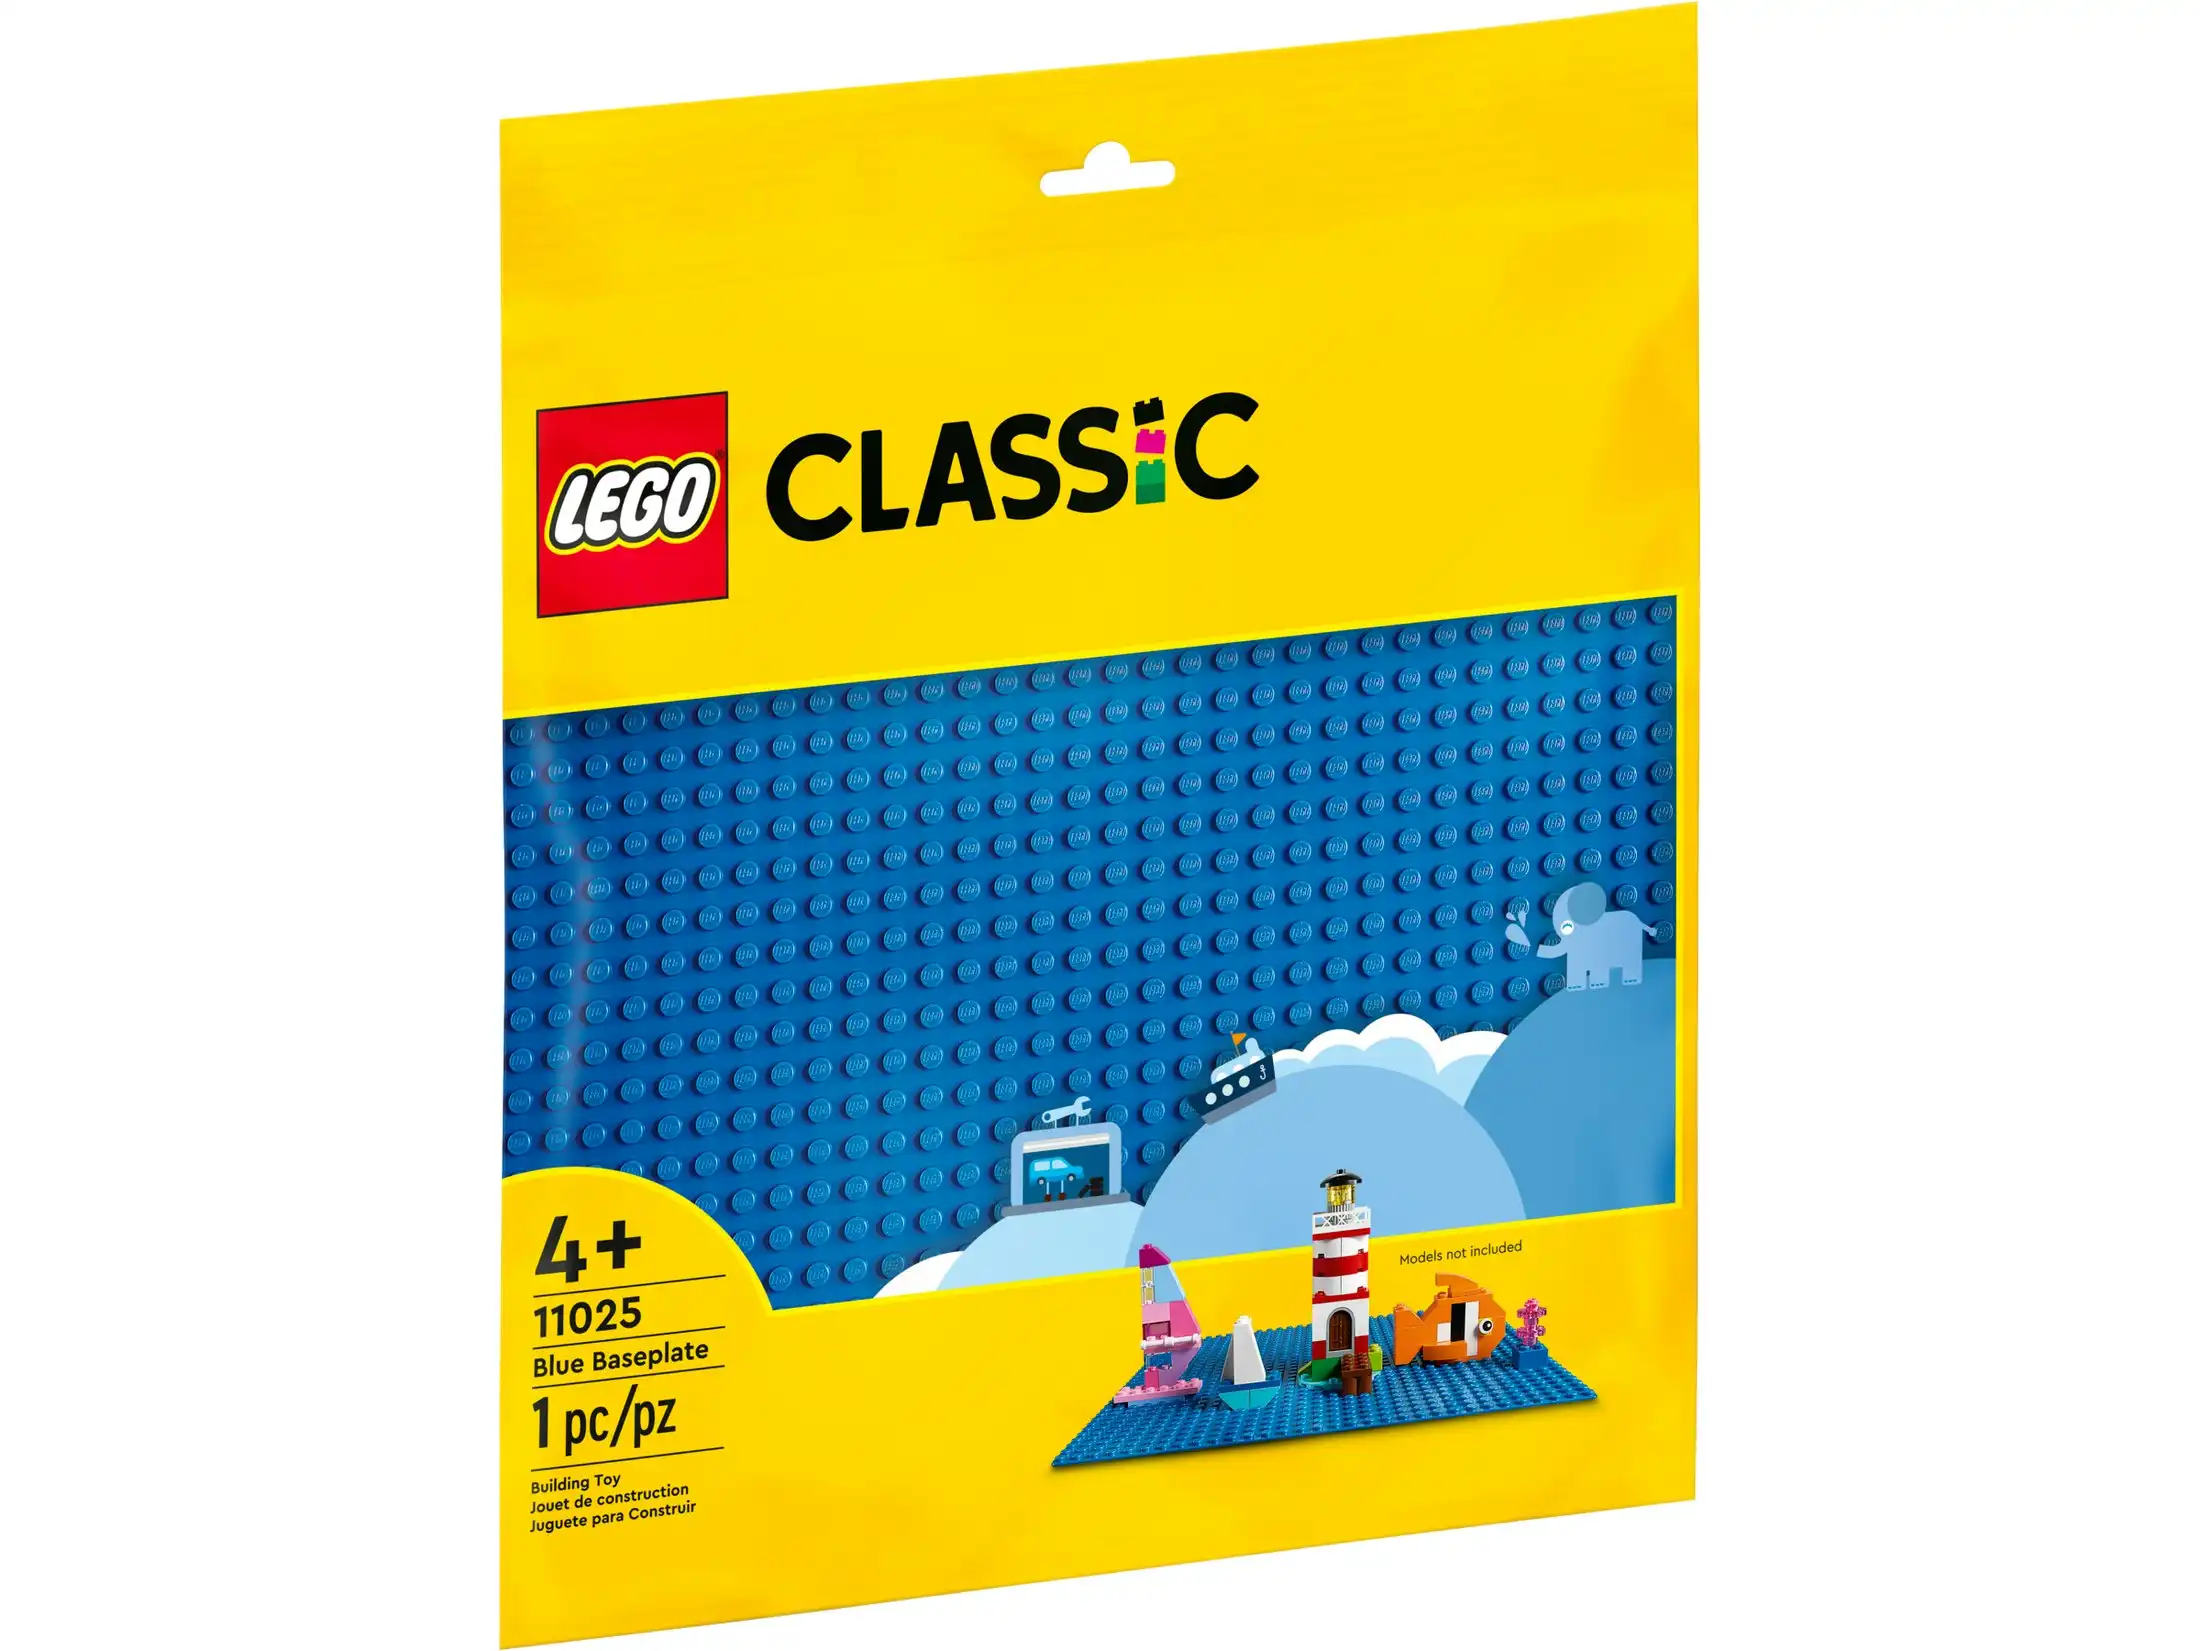 LEGO 11025 Blue Baseplate - Classic 4+